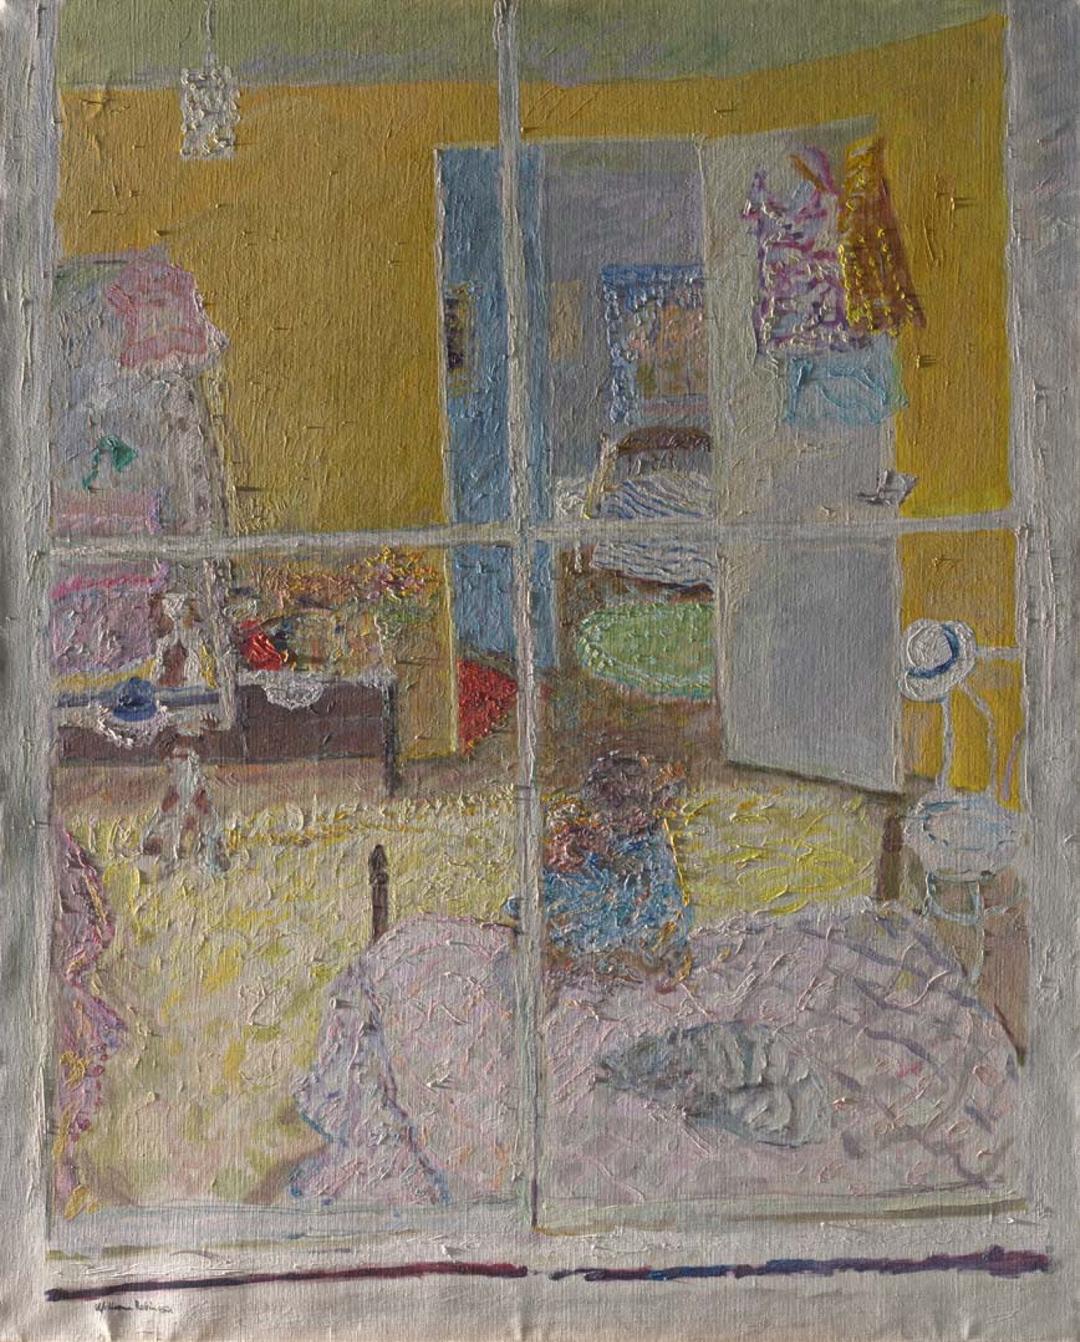 Slider: Raking light, Sophie in her bedroom 1974 ROBINSON, William